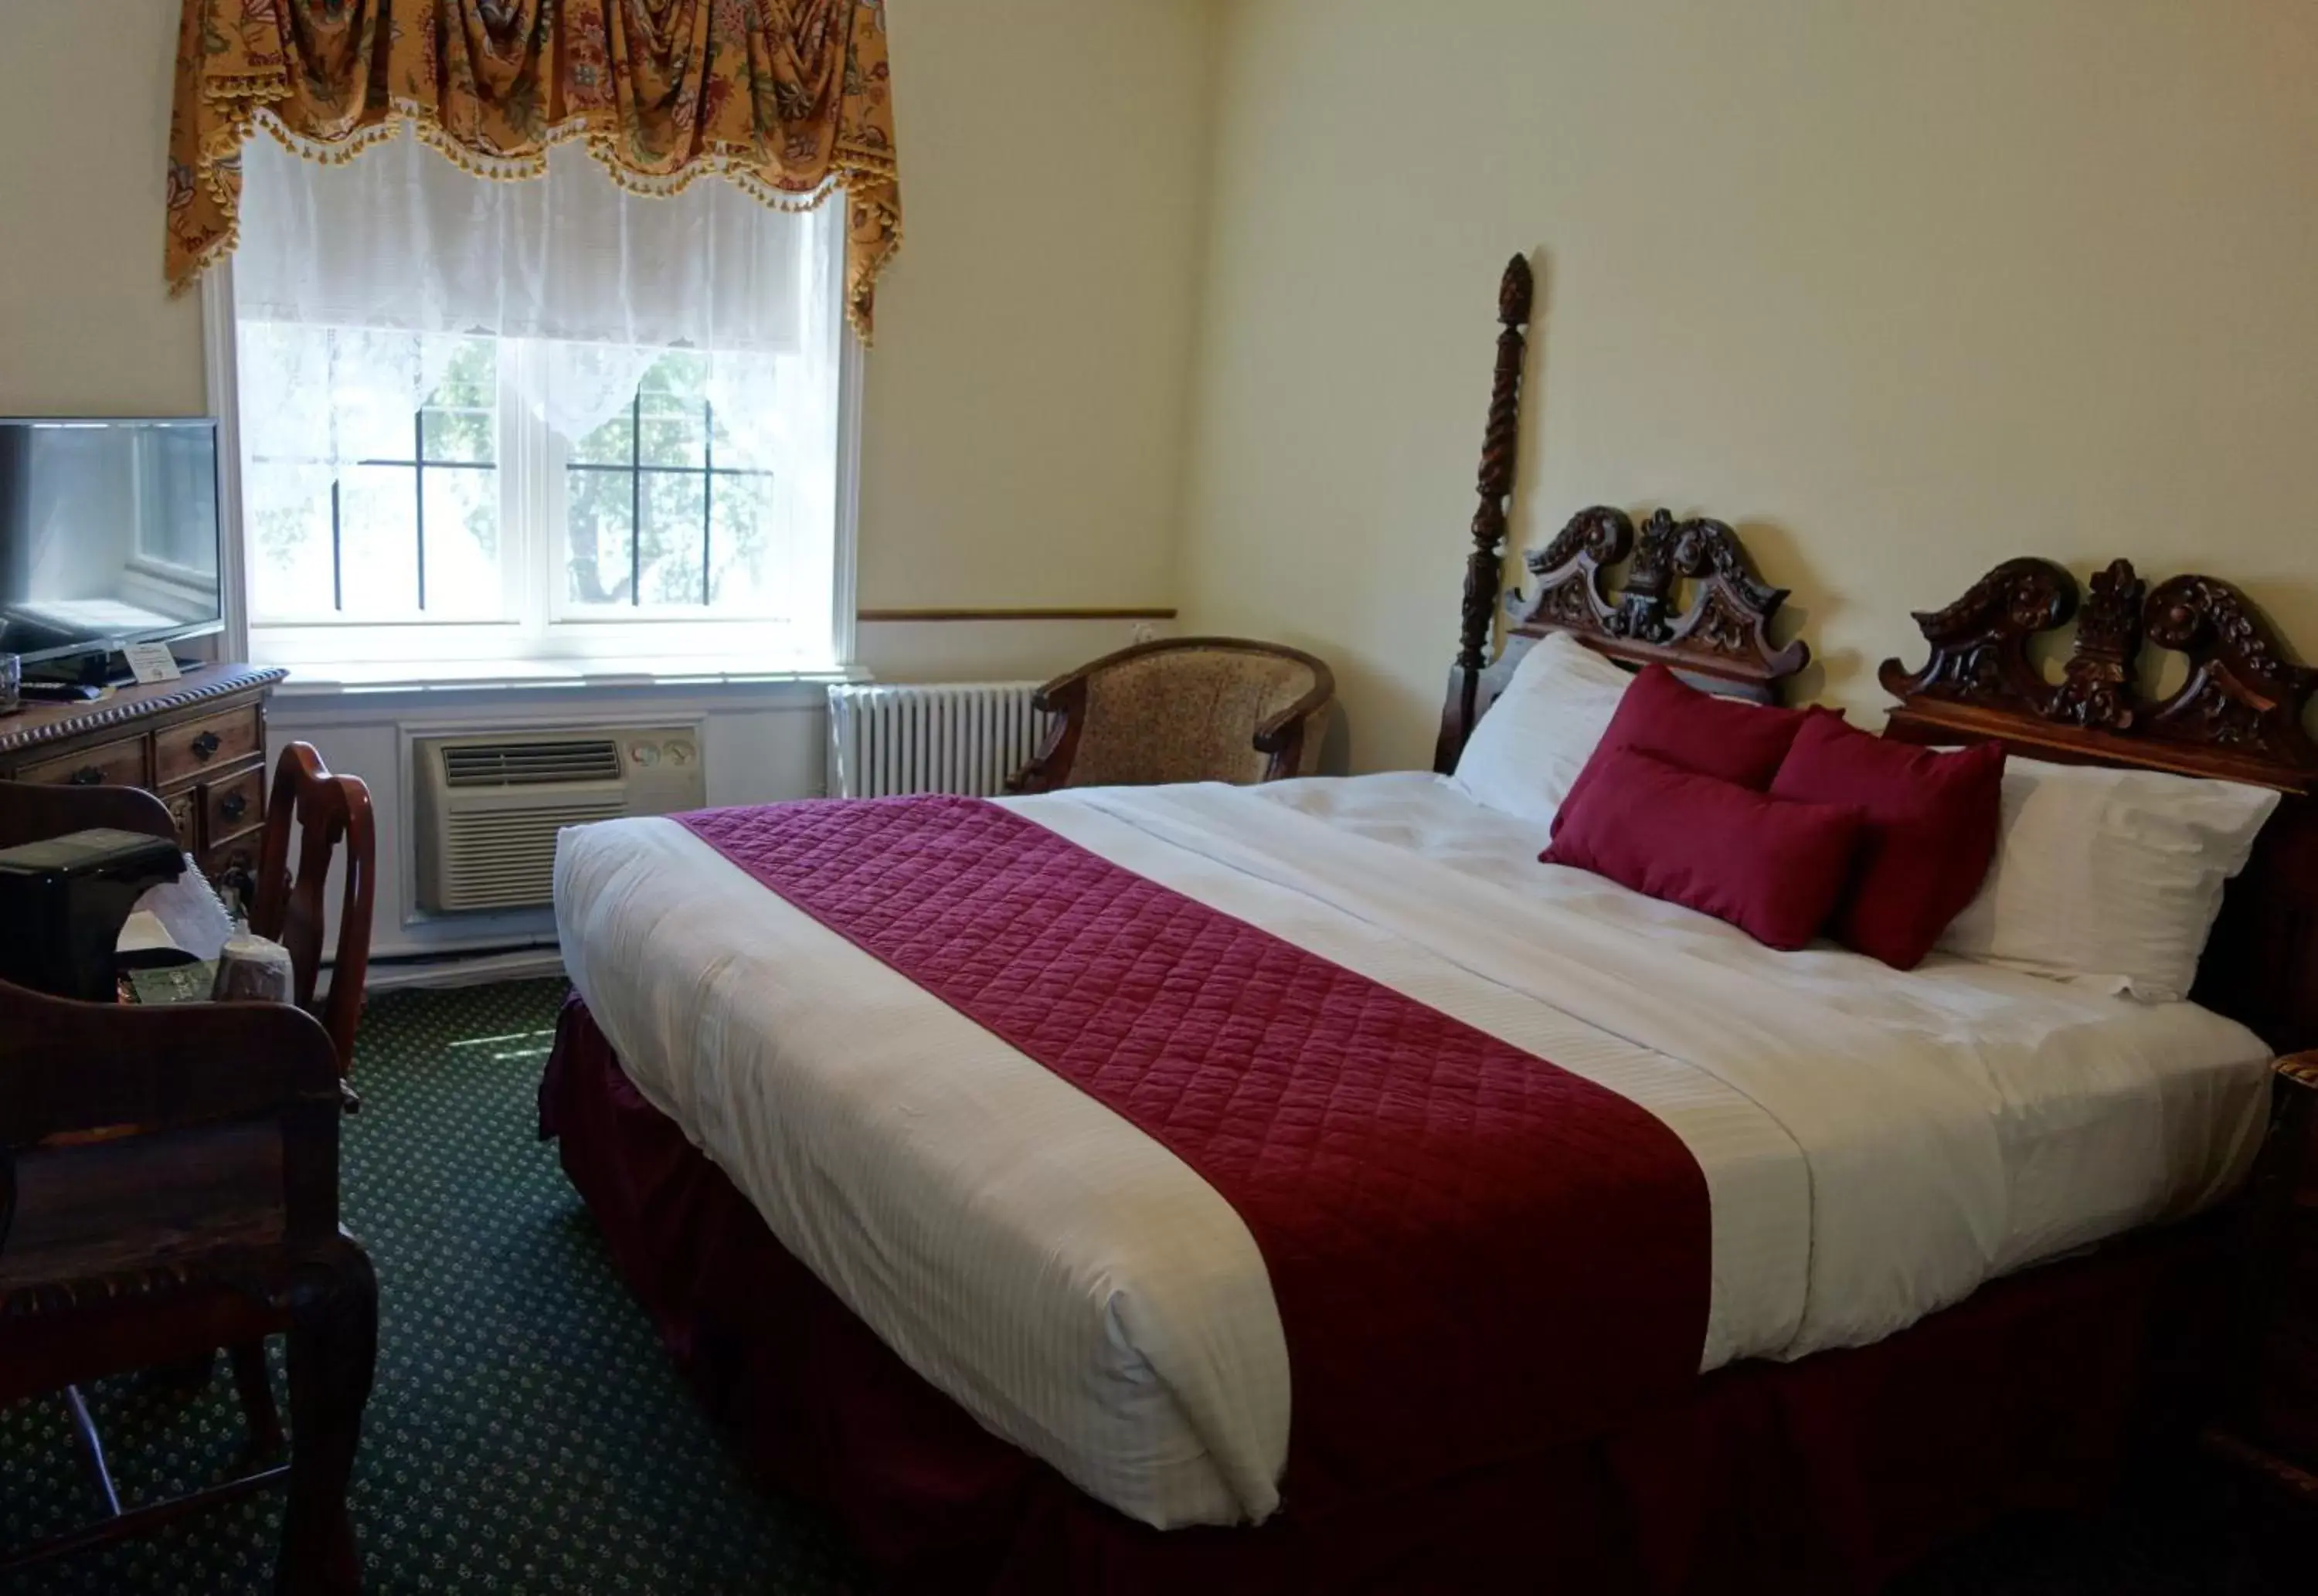 Bedroom, Bed in Lafayette Hotel Marietta